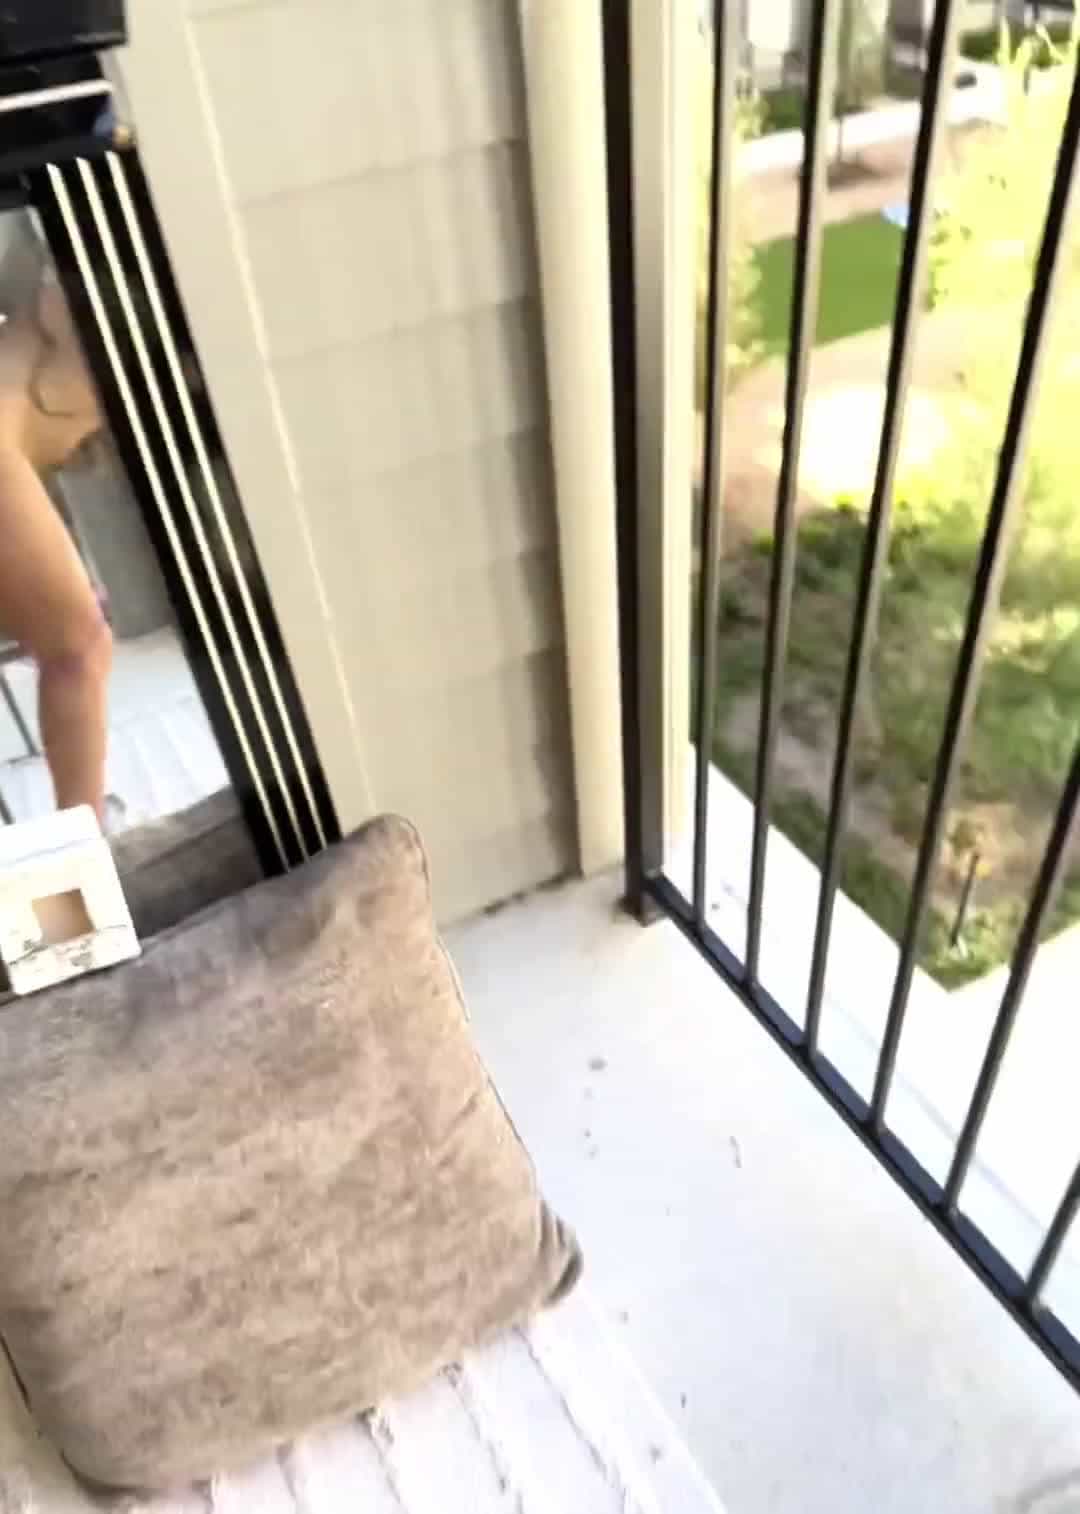 Fucking outside on the balcony!